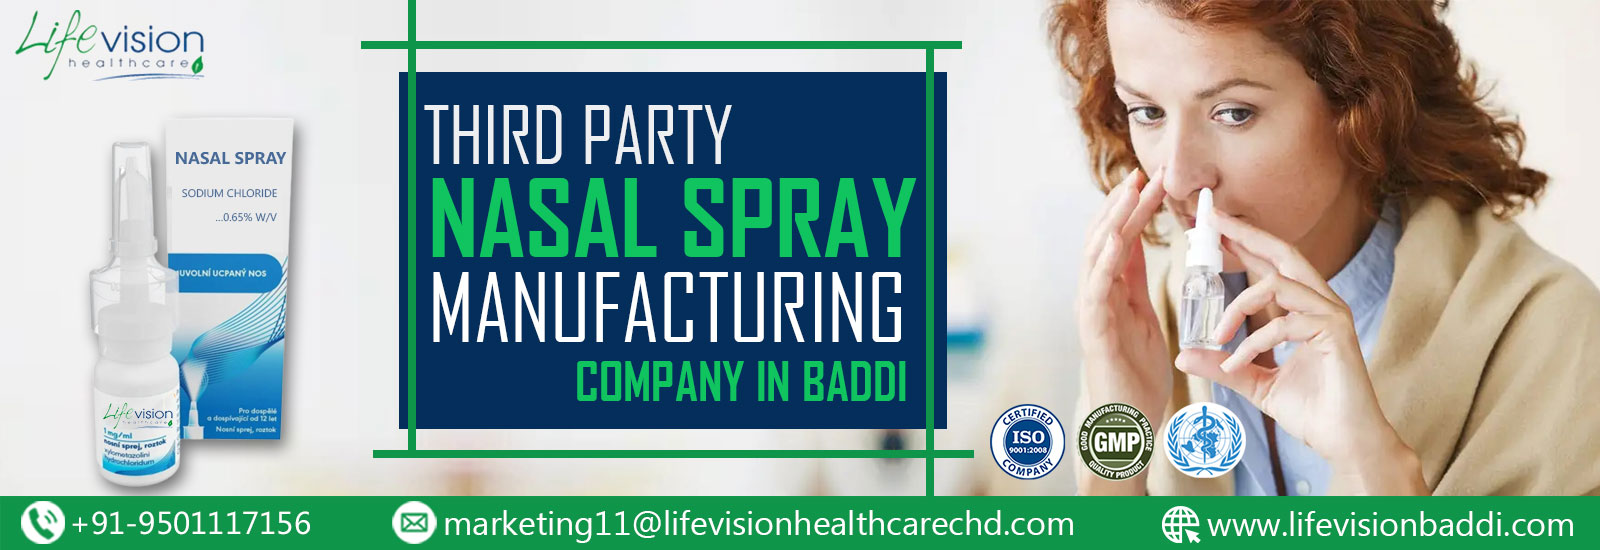 Third Party Nasal Spray Manufacturer in Baddi